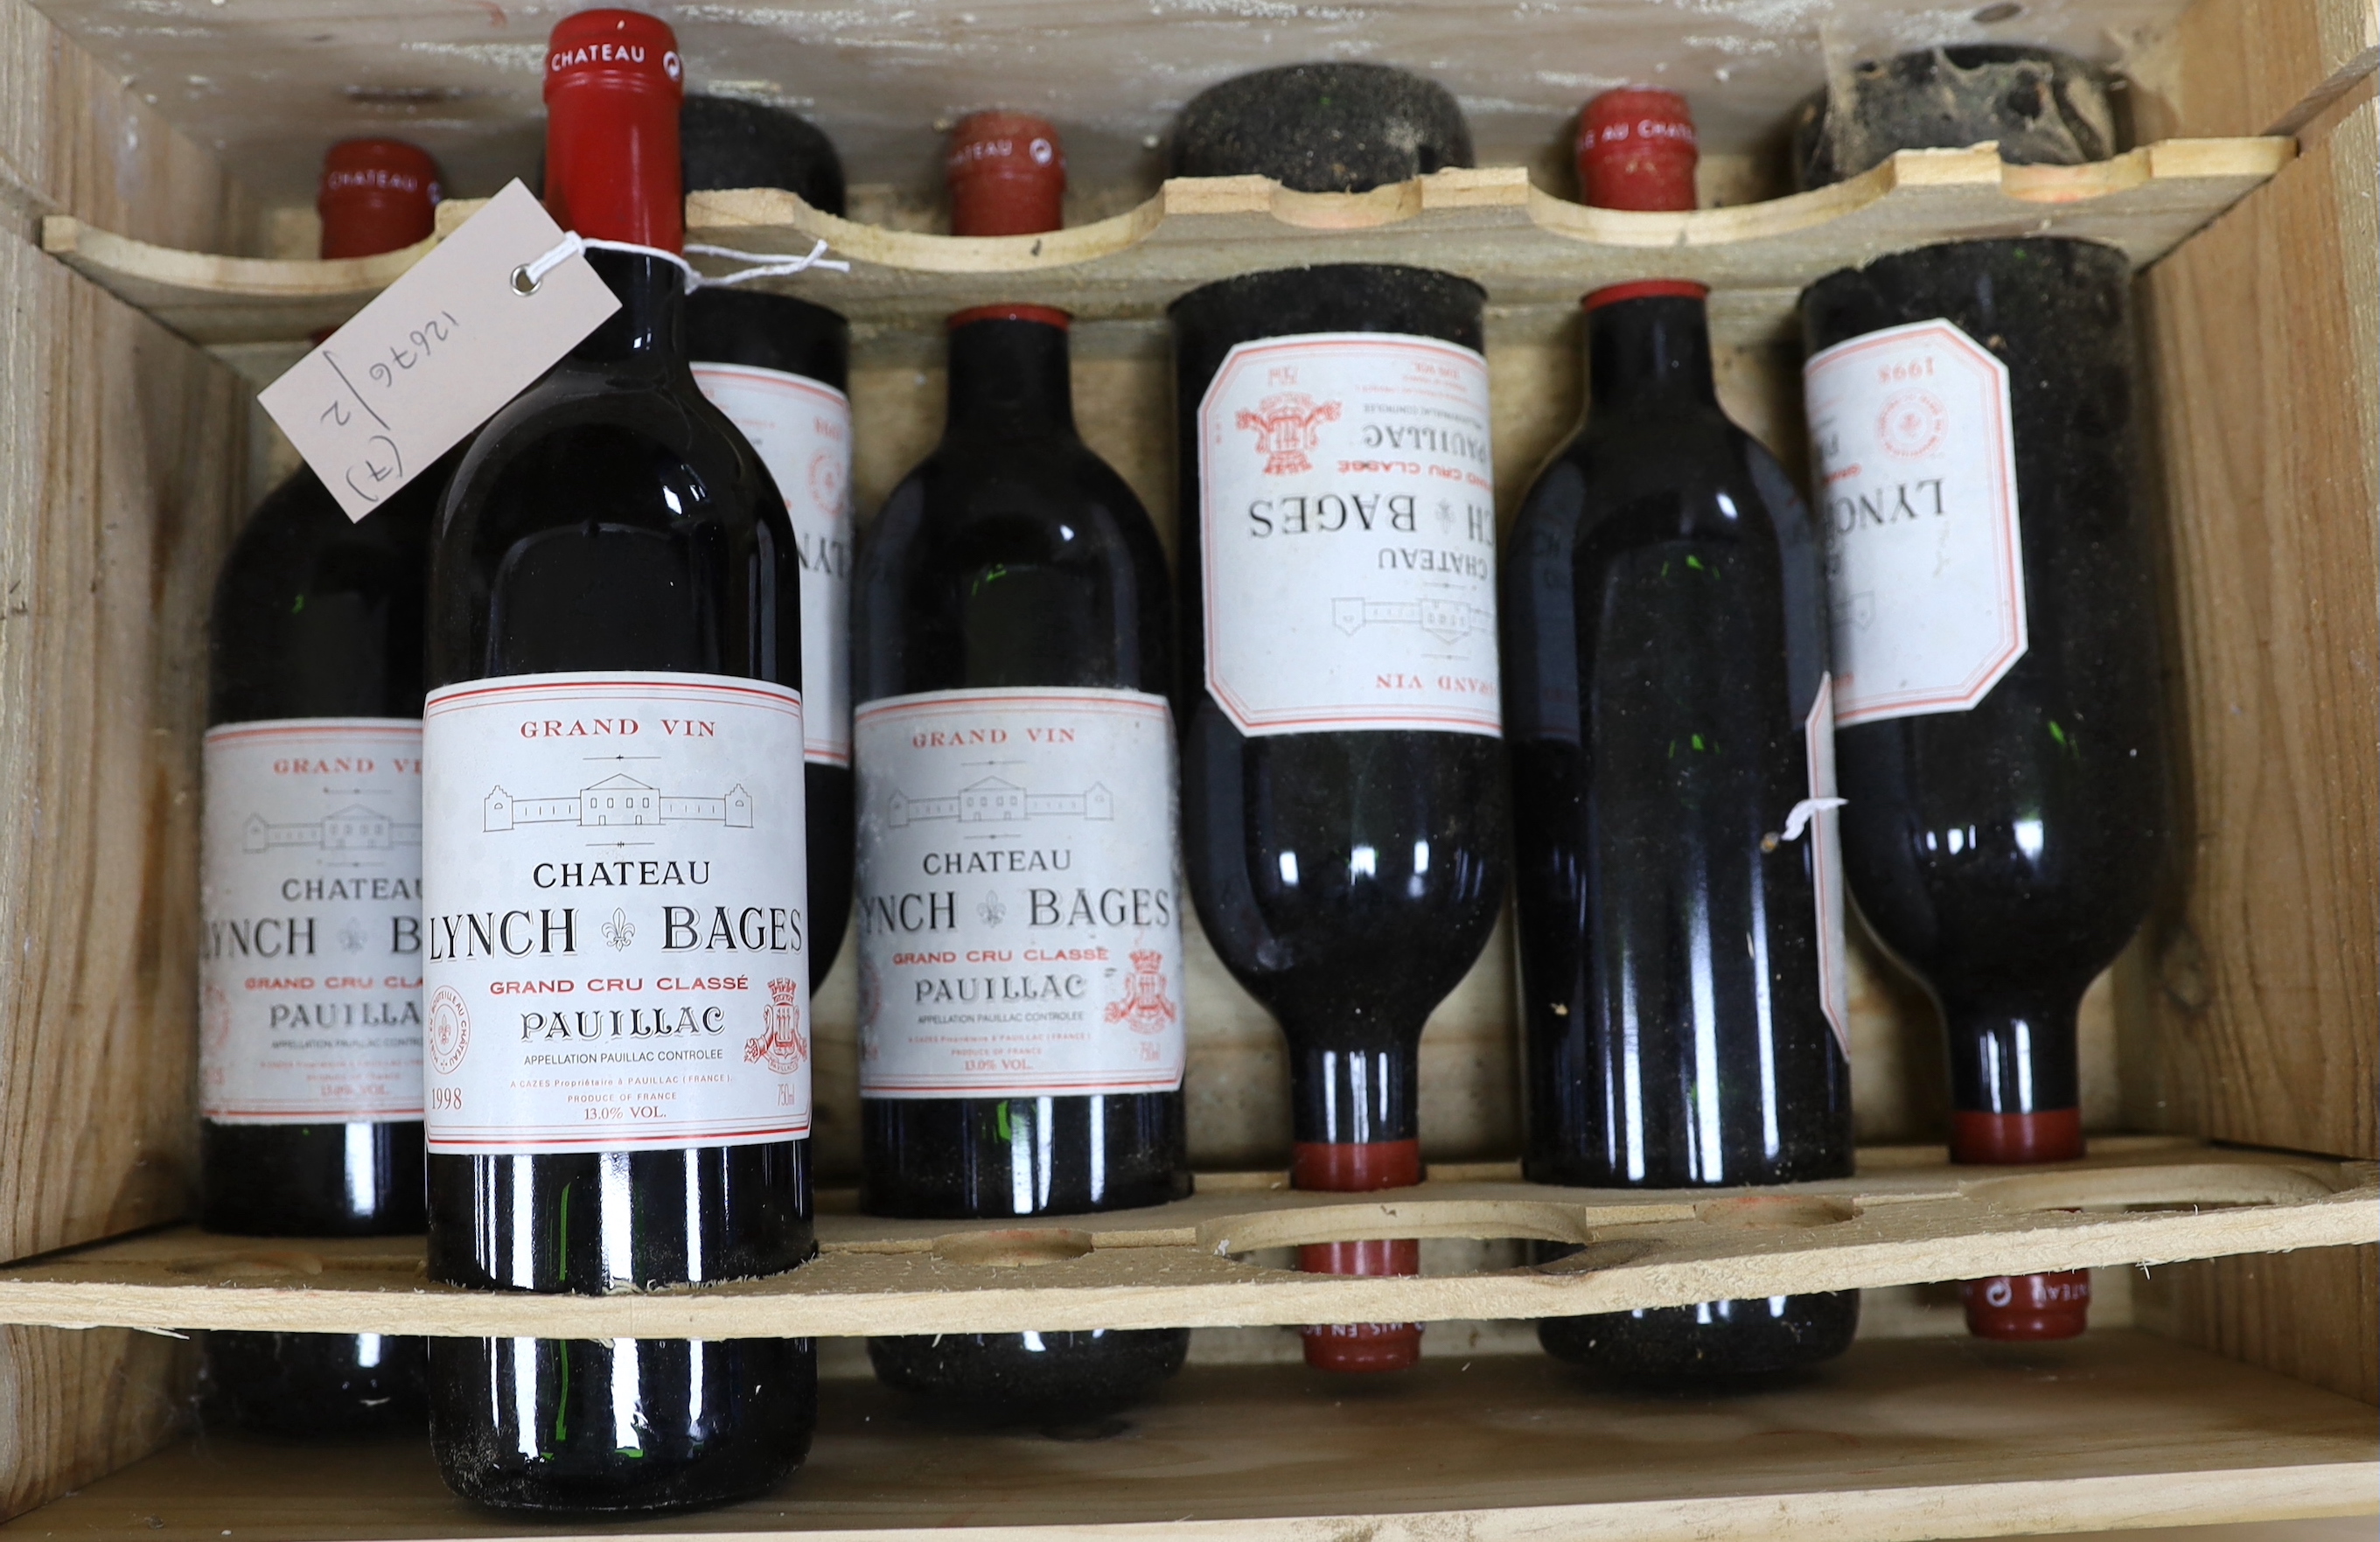 Seven bottles of Château Lynch Bages, Pauillac 1998